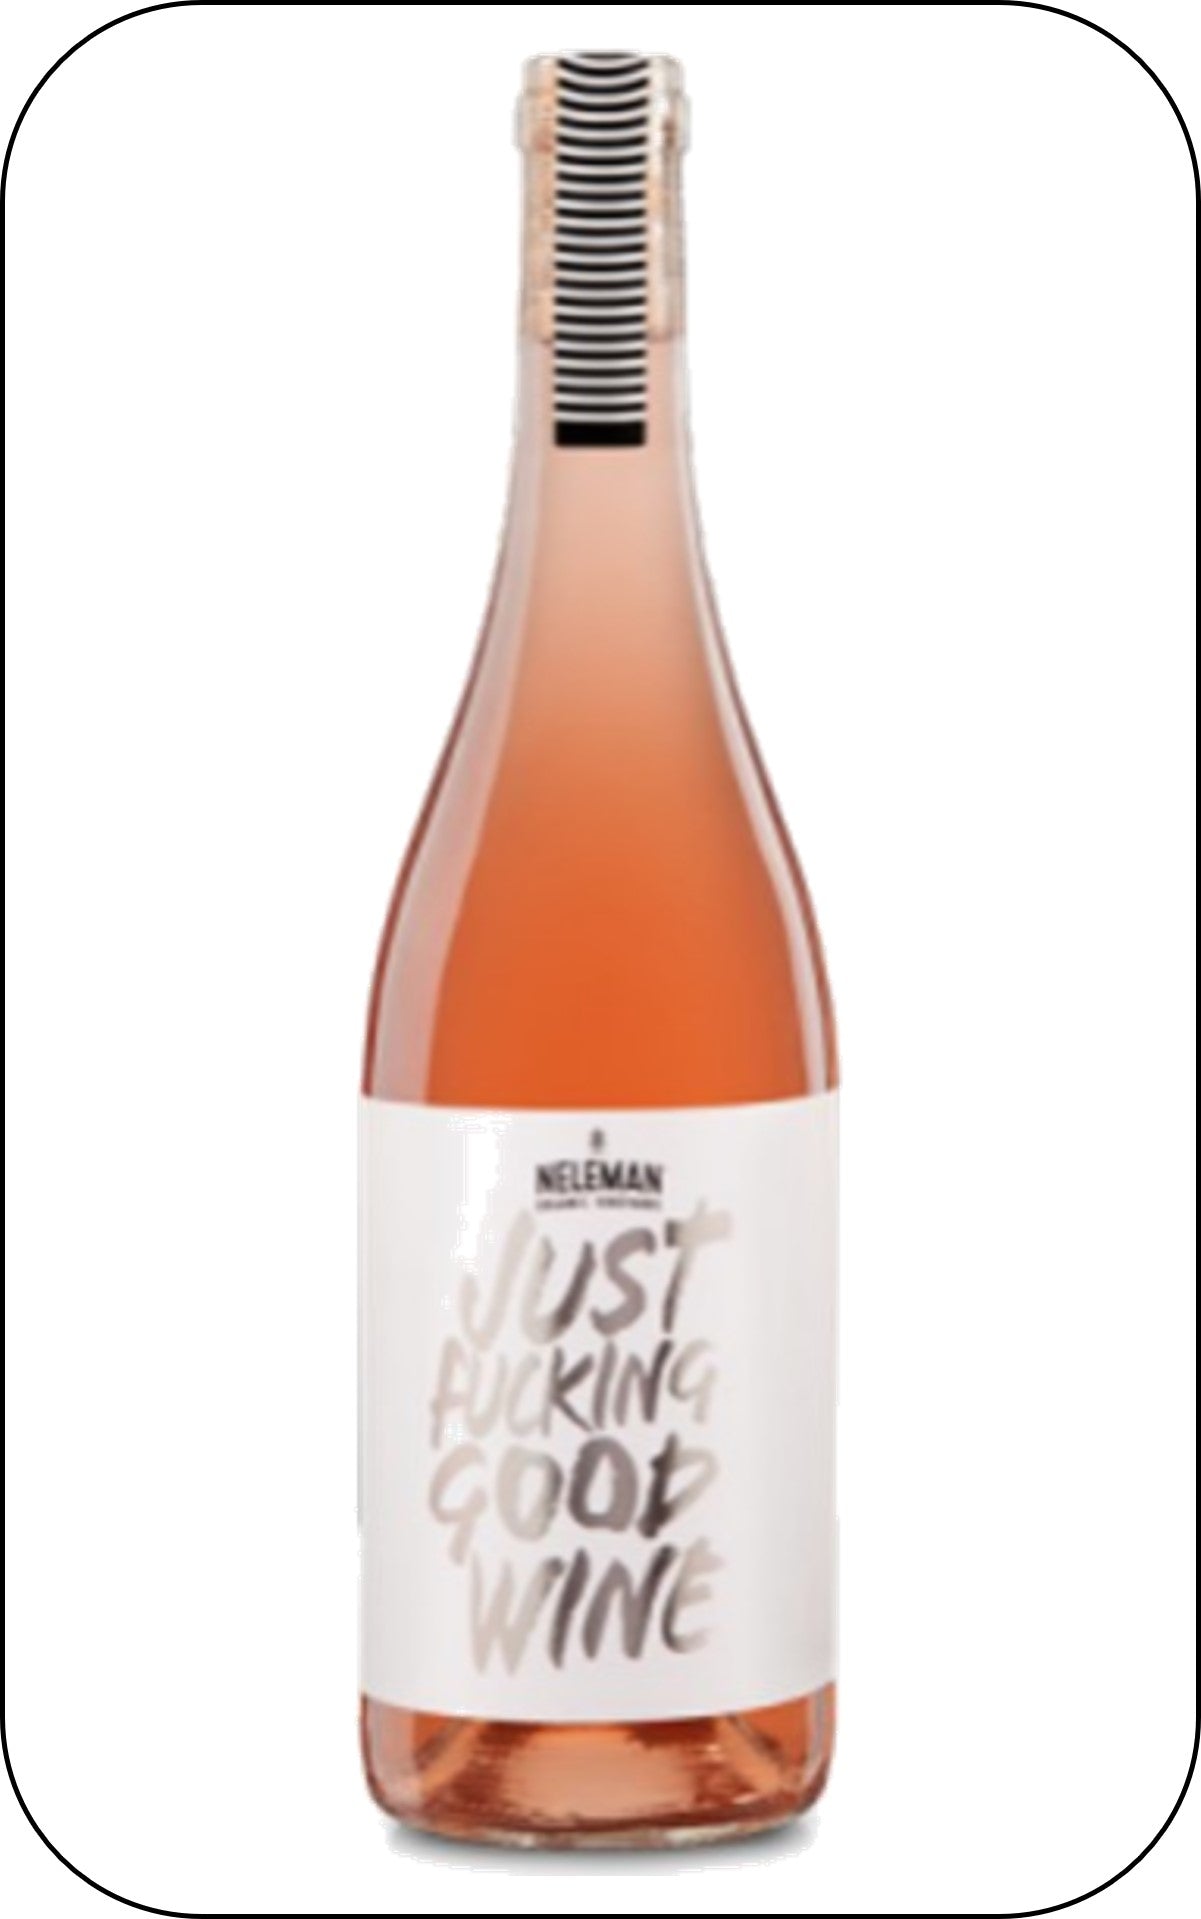 Bodegas Neleman (Certified Organic) - Just A Fucking Good Wine - 100% Garnacha Rose